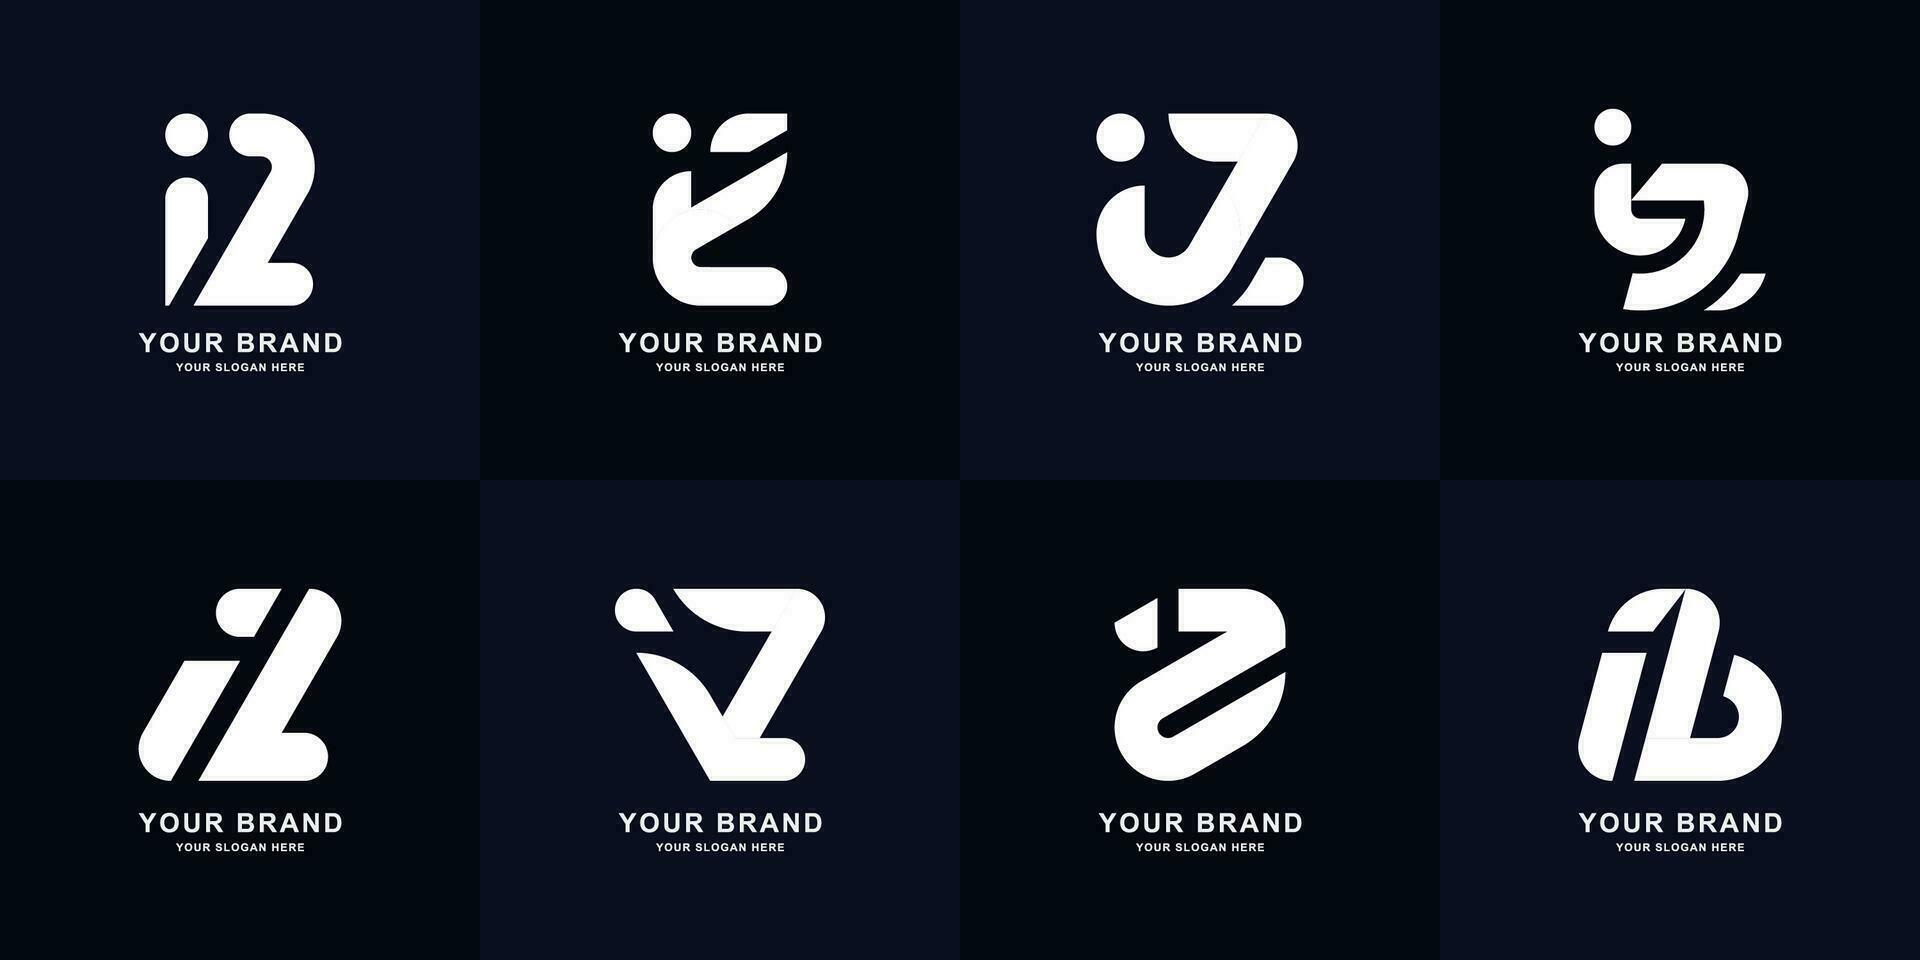 samling brev iz eller zi monogram logotyp design vektor